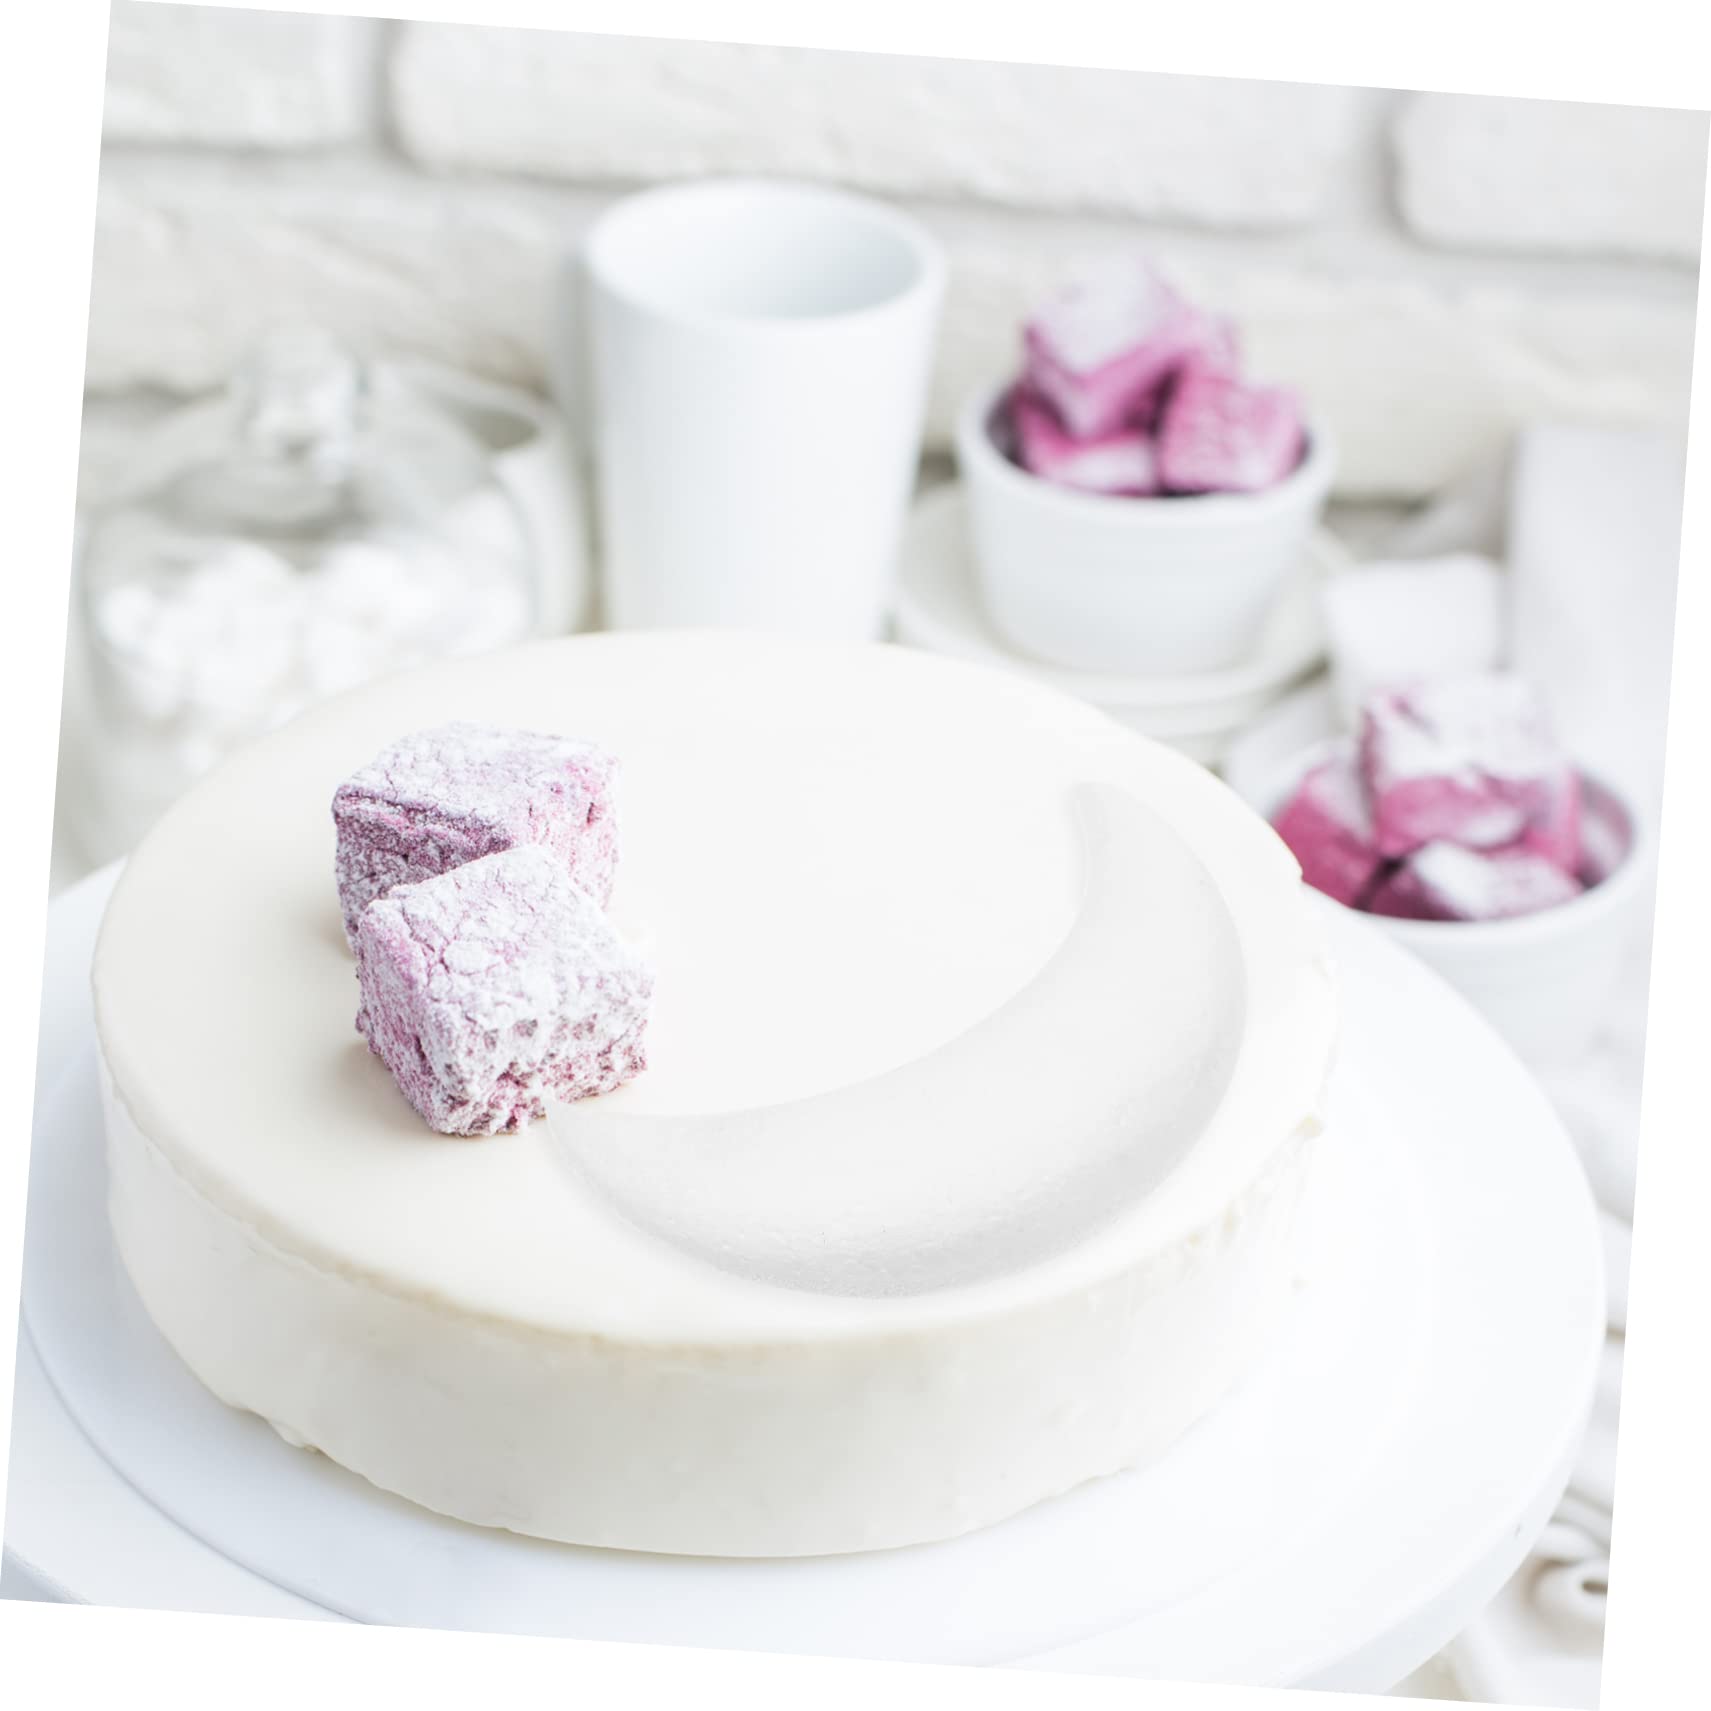 Abaodam Moon Cake Embryo Cake Decorating Turntable Fake Cake Model Multipurpose Tool Mutitool Polystyrene Cake Dummy Cake Dummies 4 Inch Multitools Crafts Foam Child Heart-Shaped White